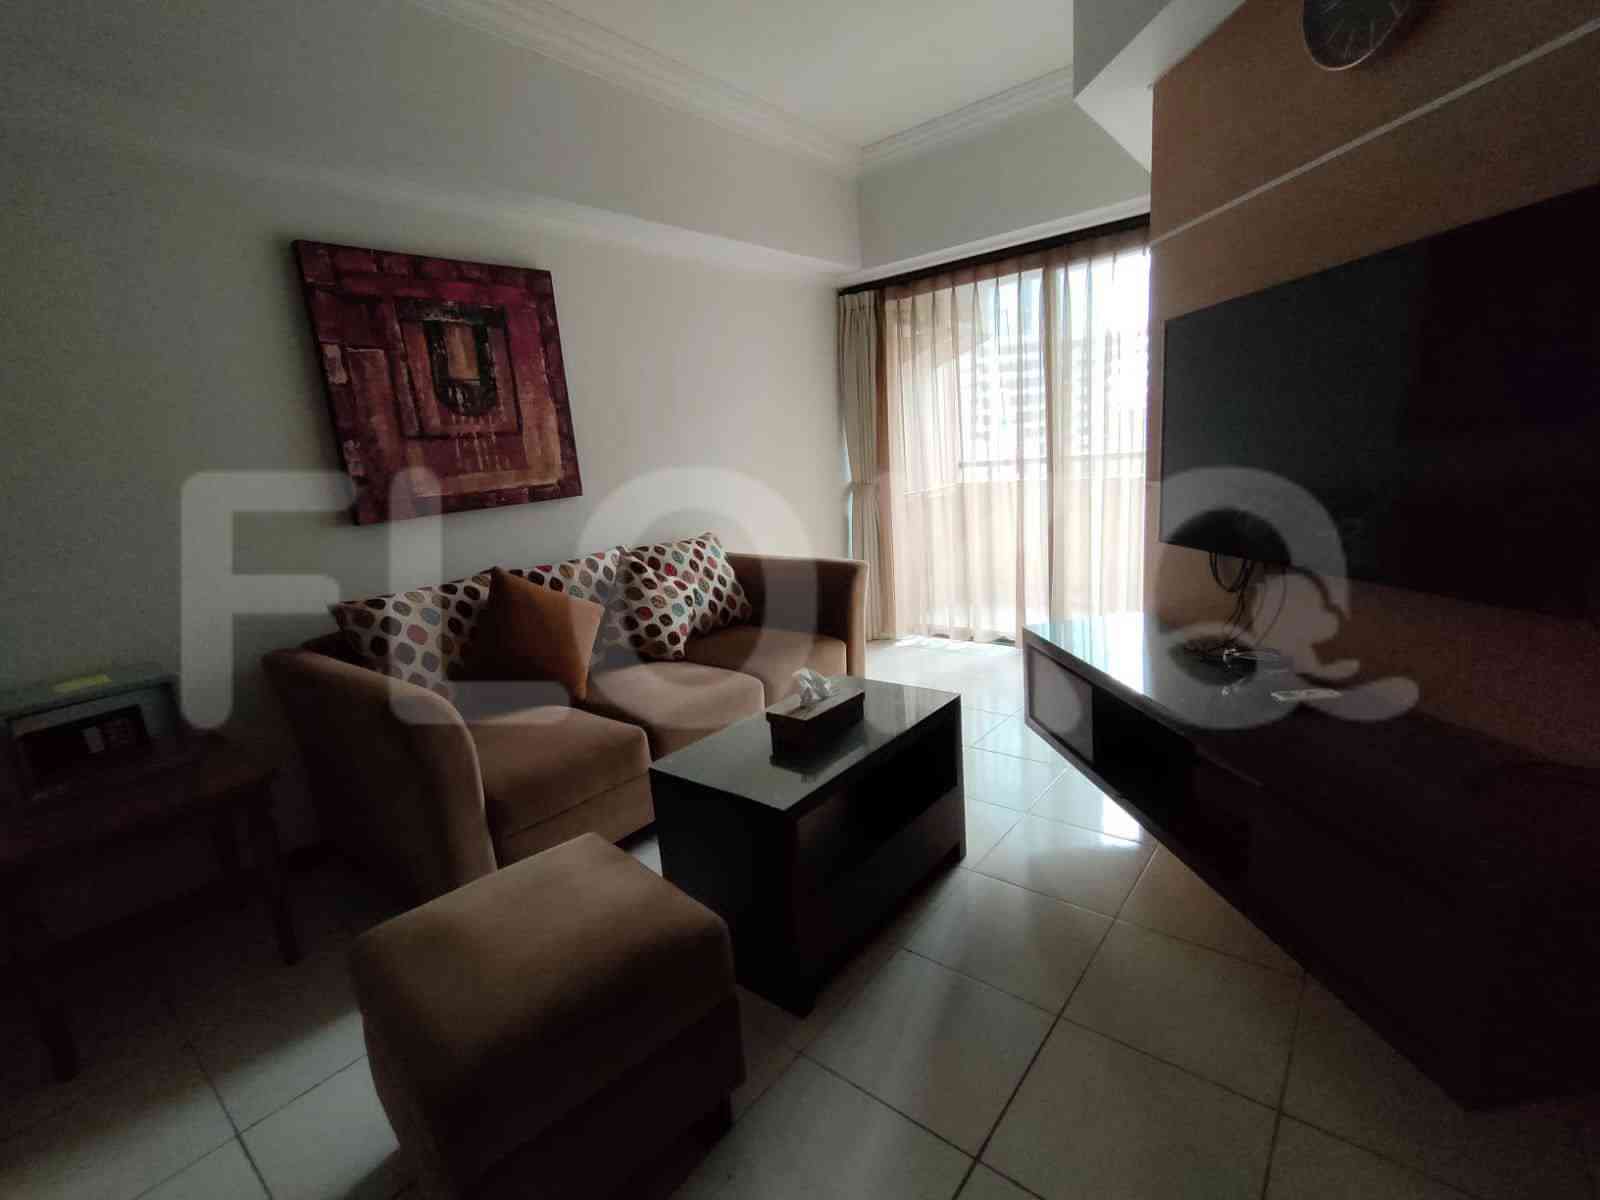 2 Bedroom on 16th Floor for Rent in Aryaduta Suites Semanggi - fsu92d 1